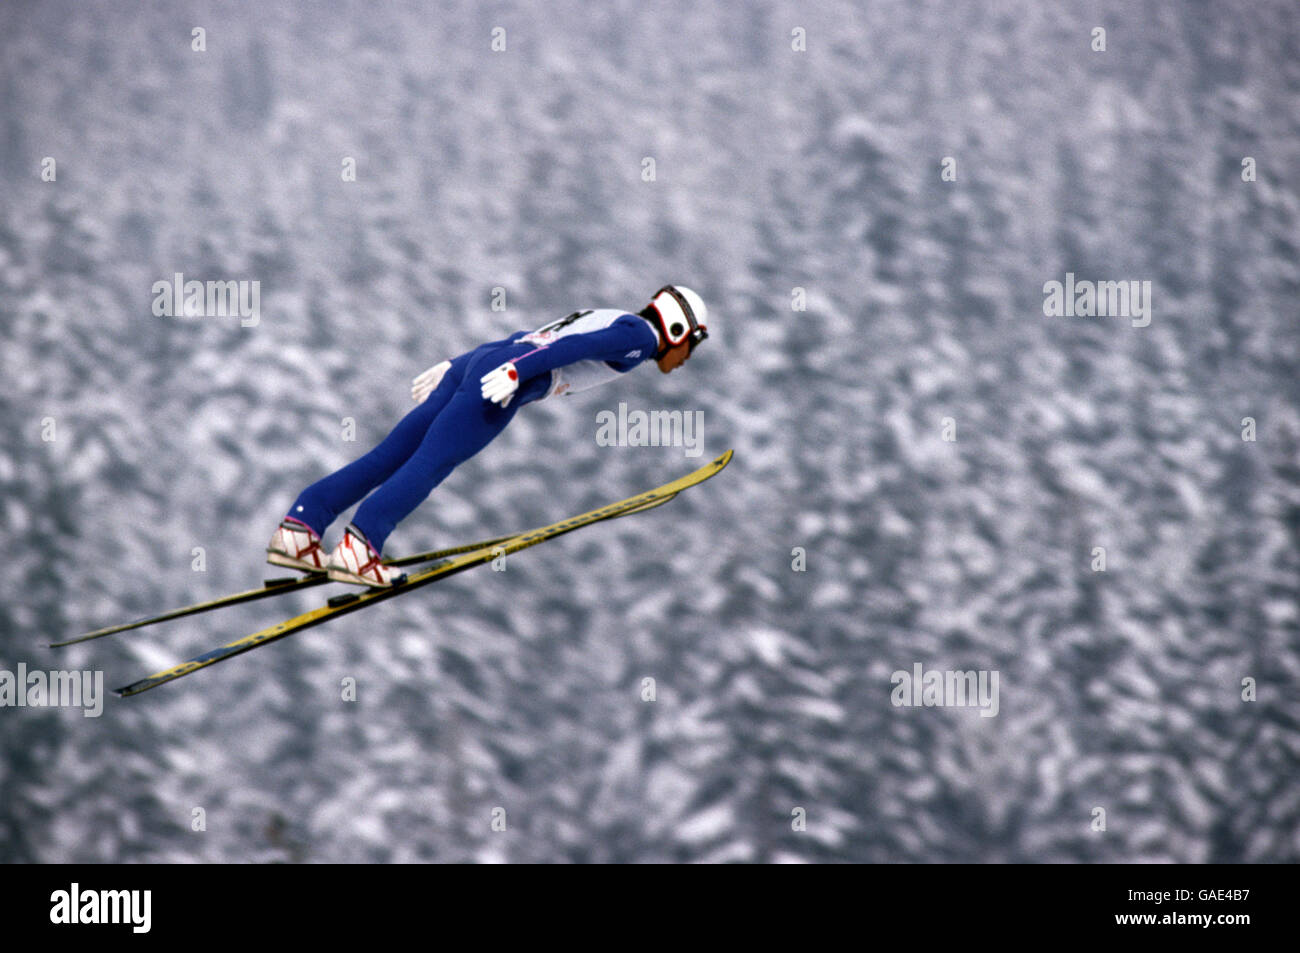 Winter Olympic Games 1984, Sarajevo. Japan's Masaru Nagaoka competes in the Ski Jump. Stock Photo